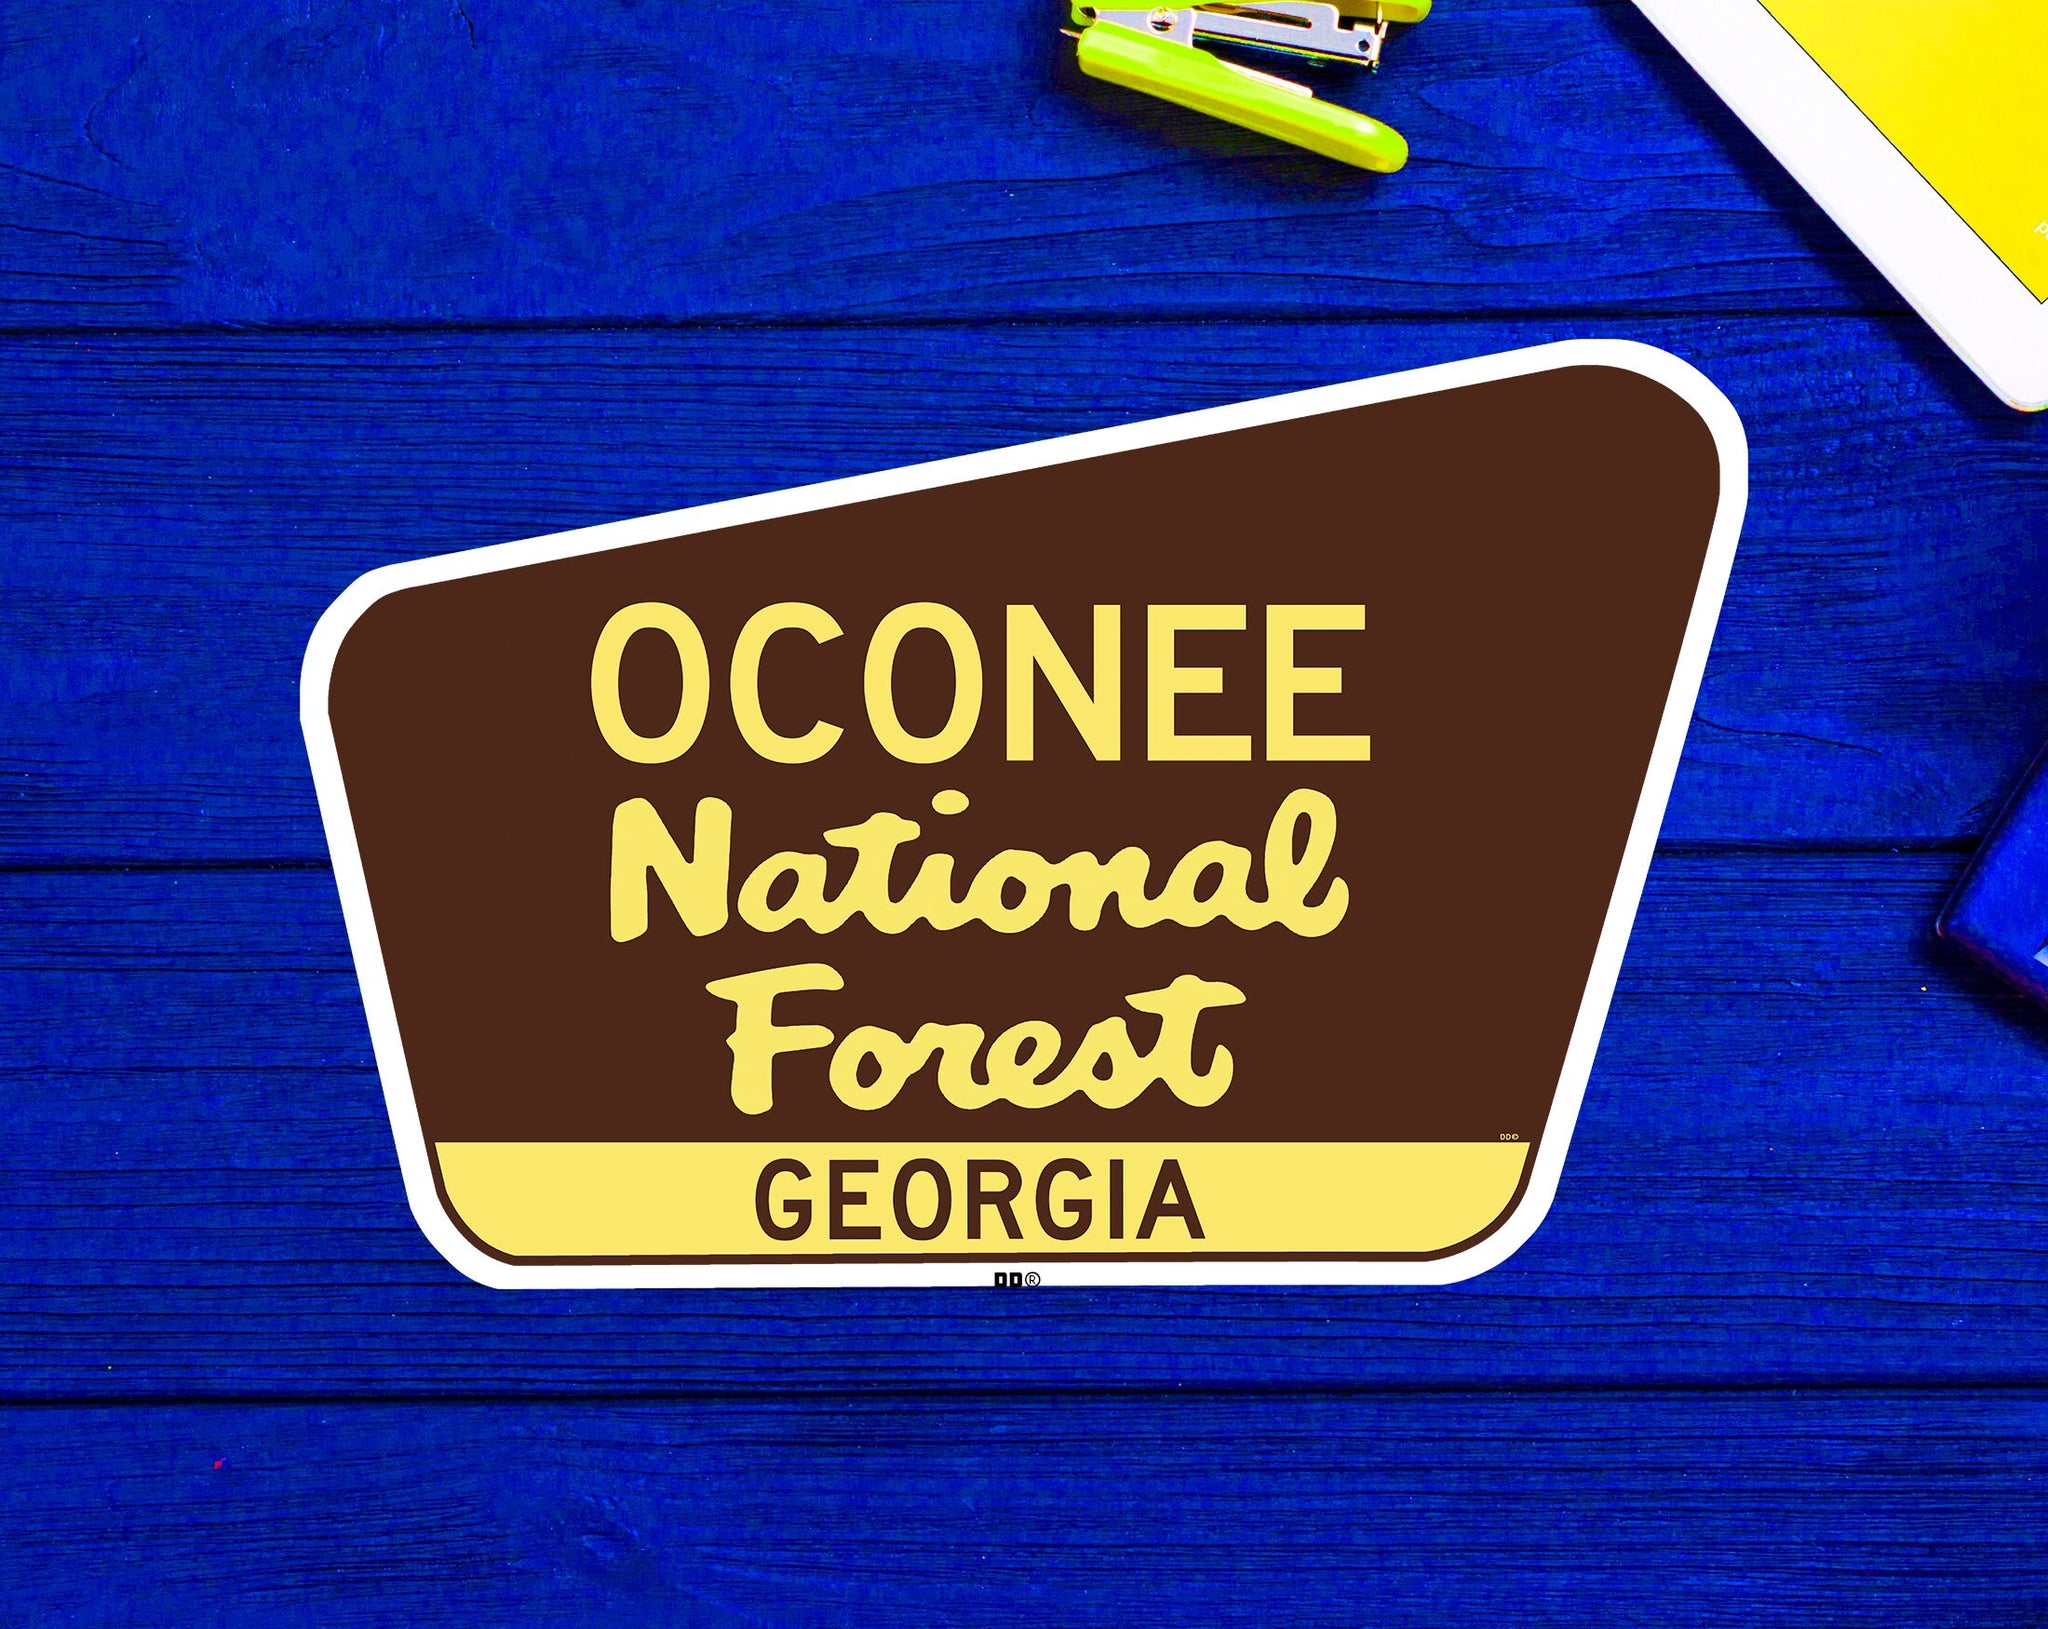 Oconee National Forest Georgia 3.75" x 2.5" Vinyl